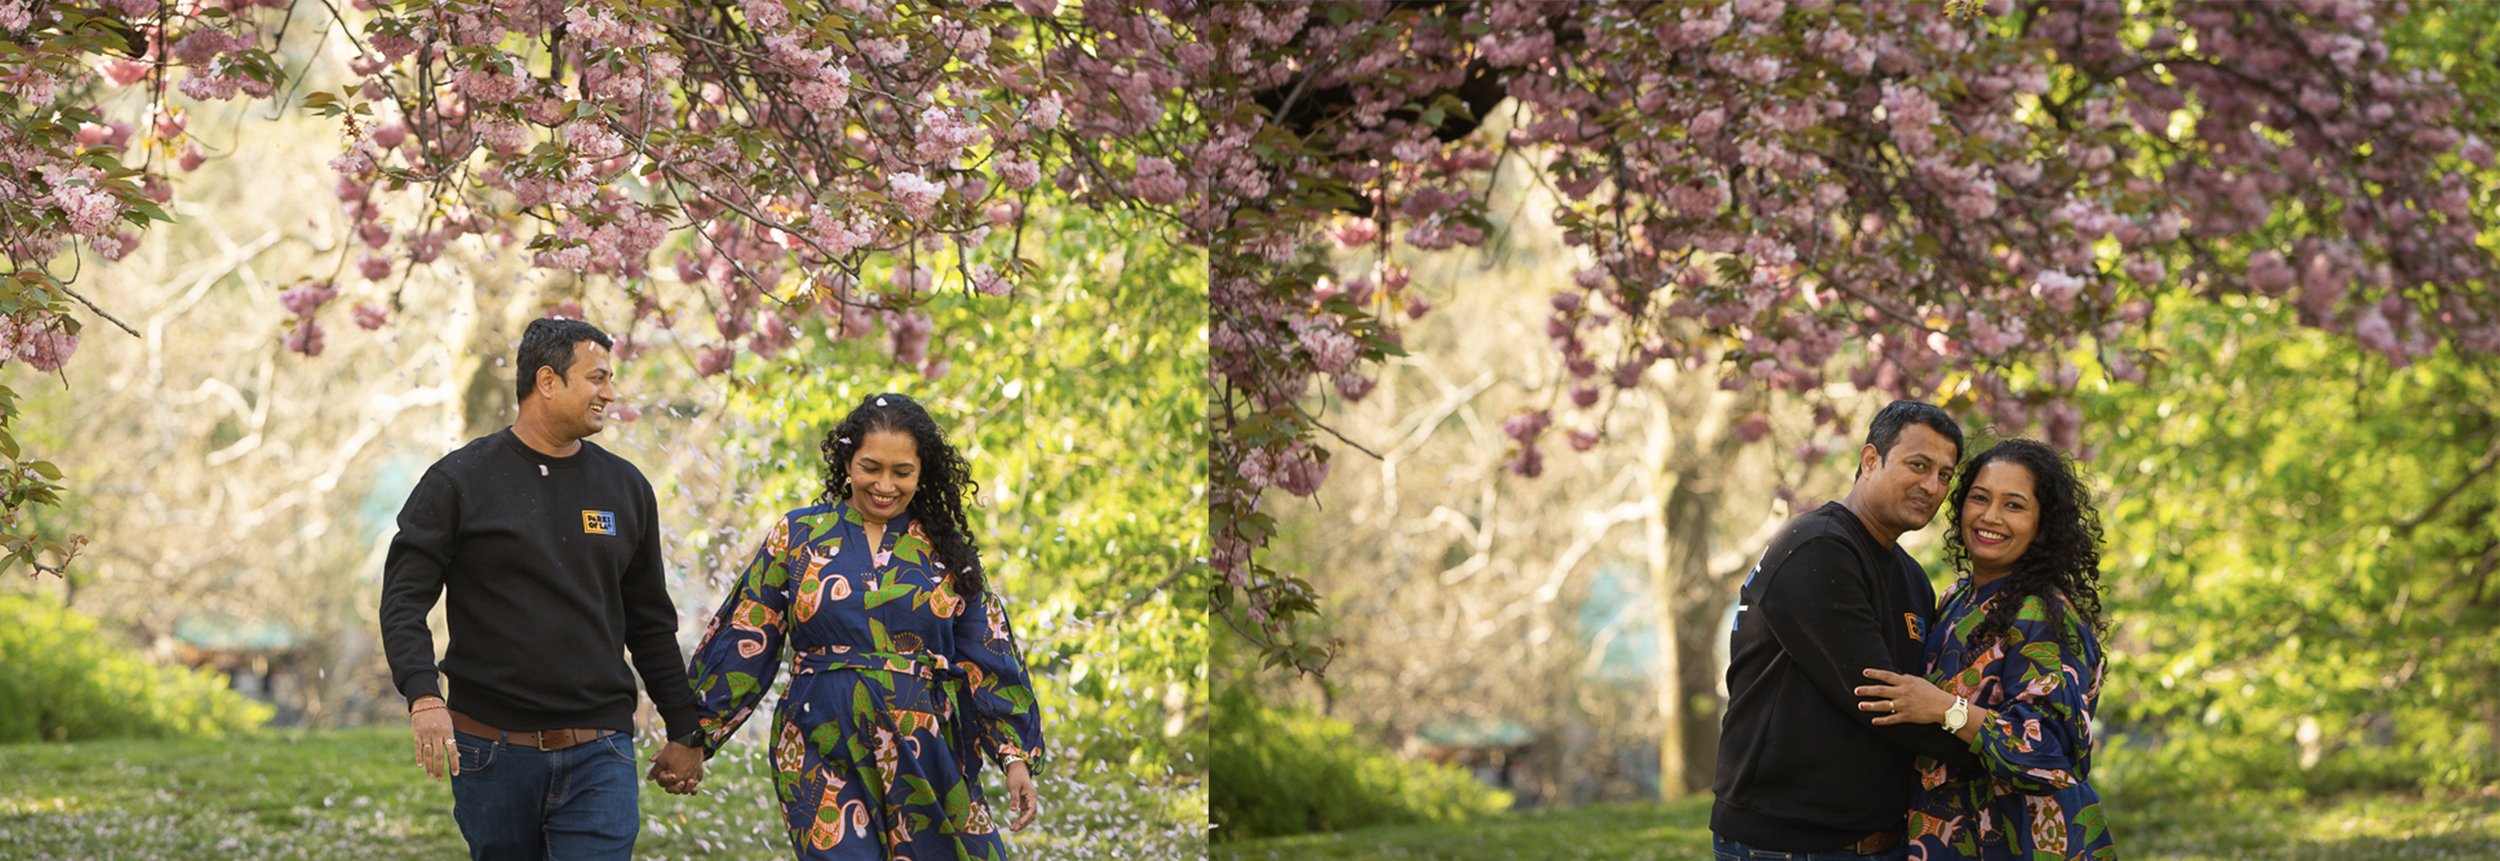 Central Park NYC Cherry Blossom Family Photographer _ 0010.jpg